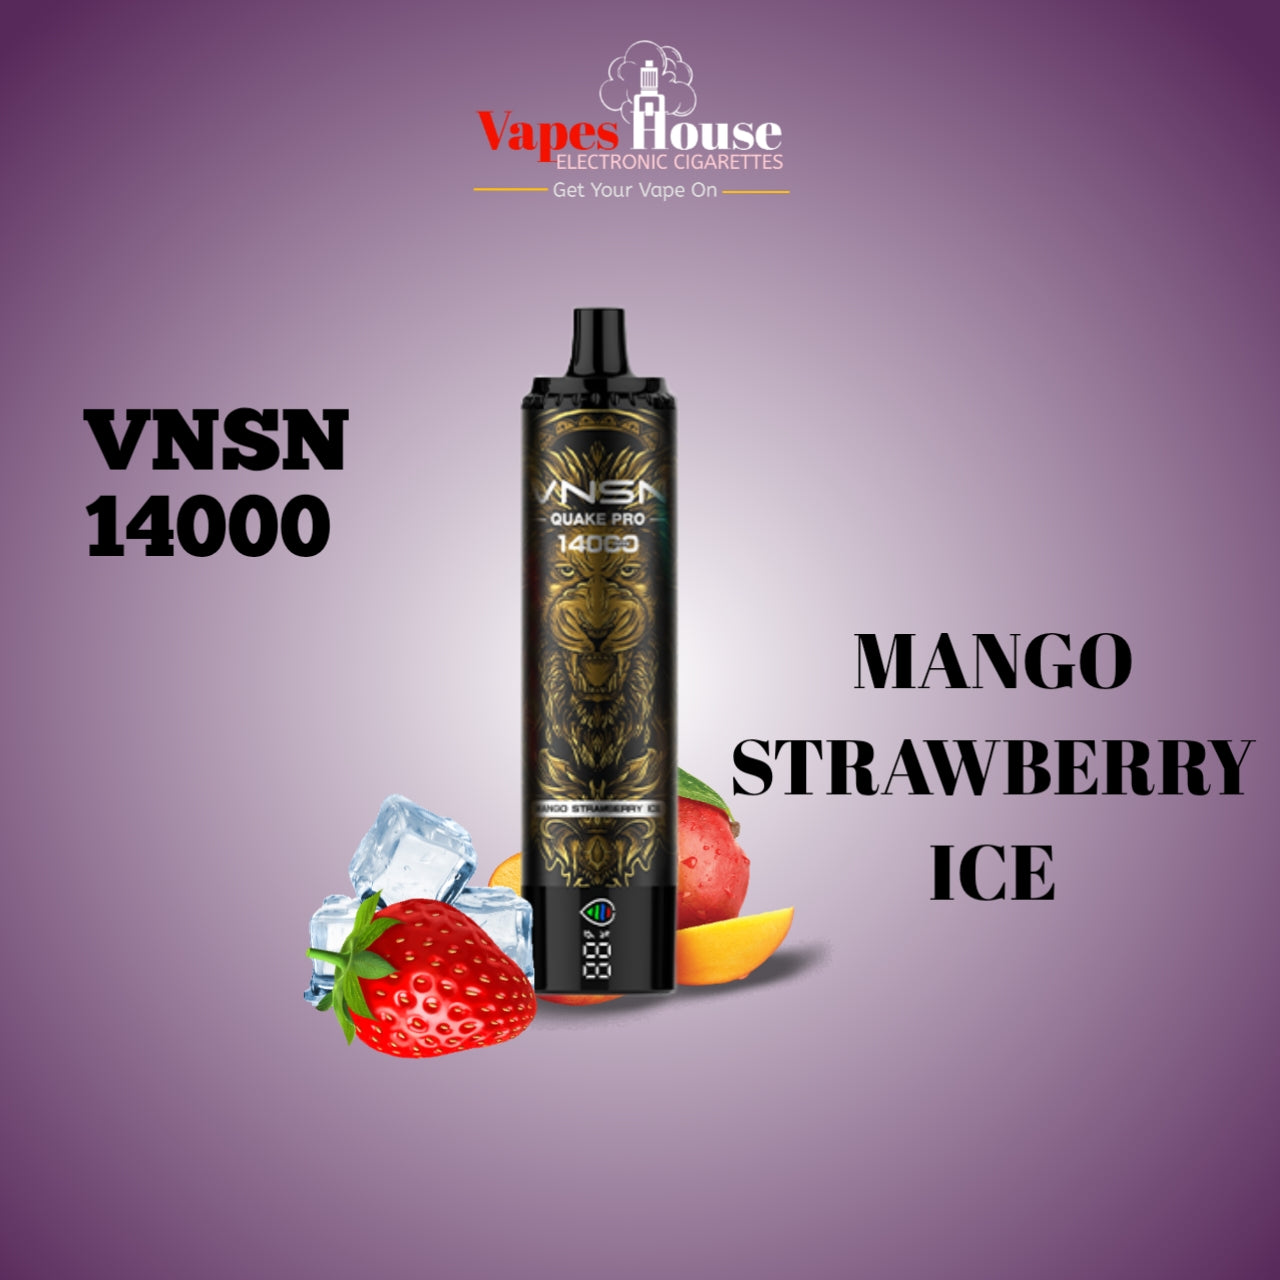 VNSN Quake Pro 14000 Puffs Mango Strawberry Ice 